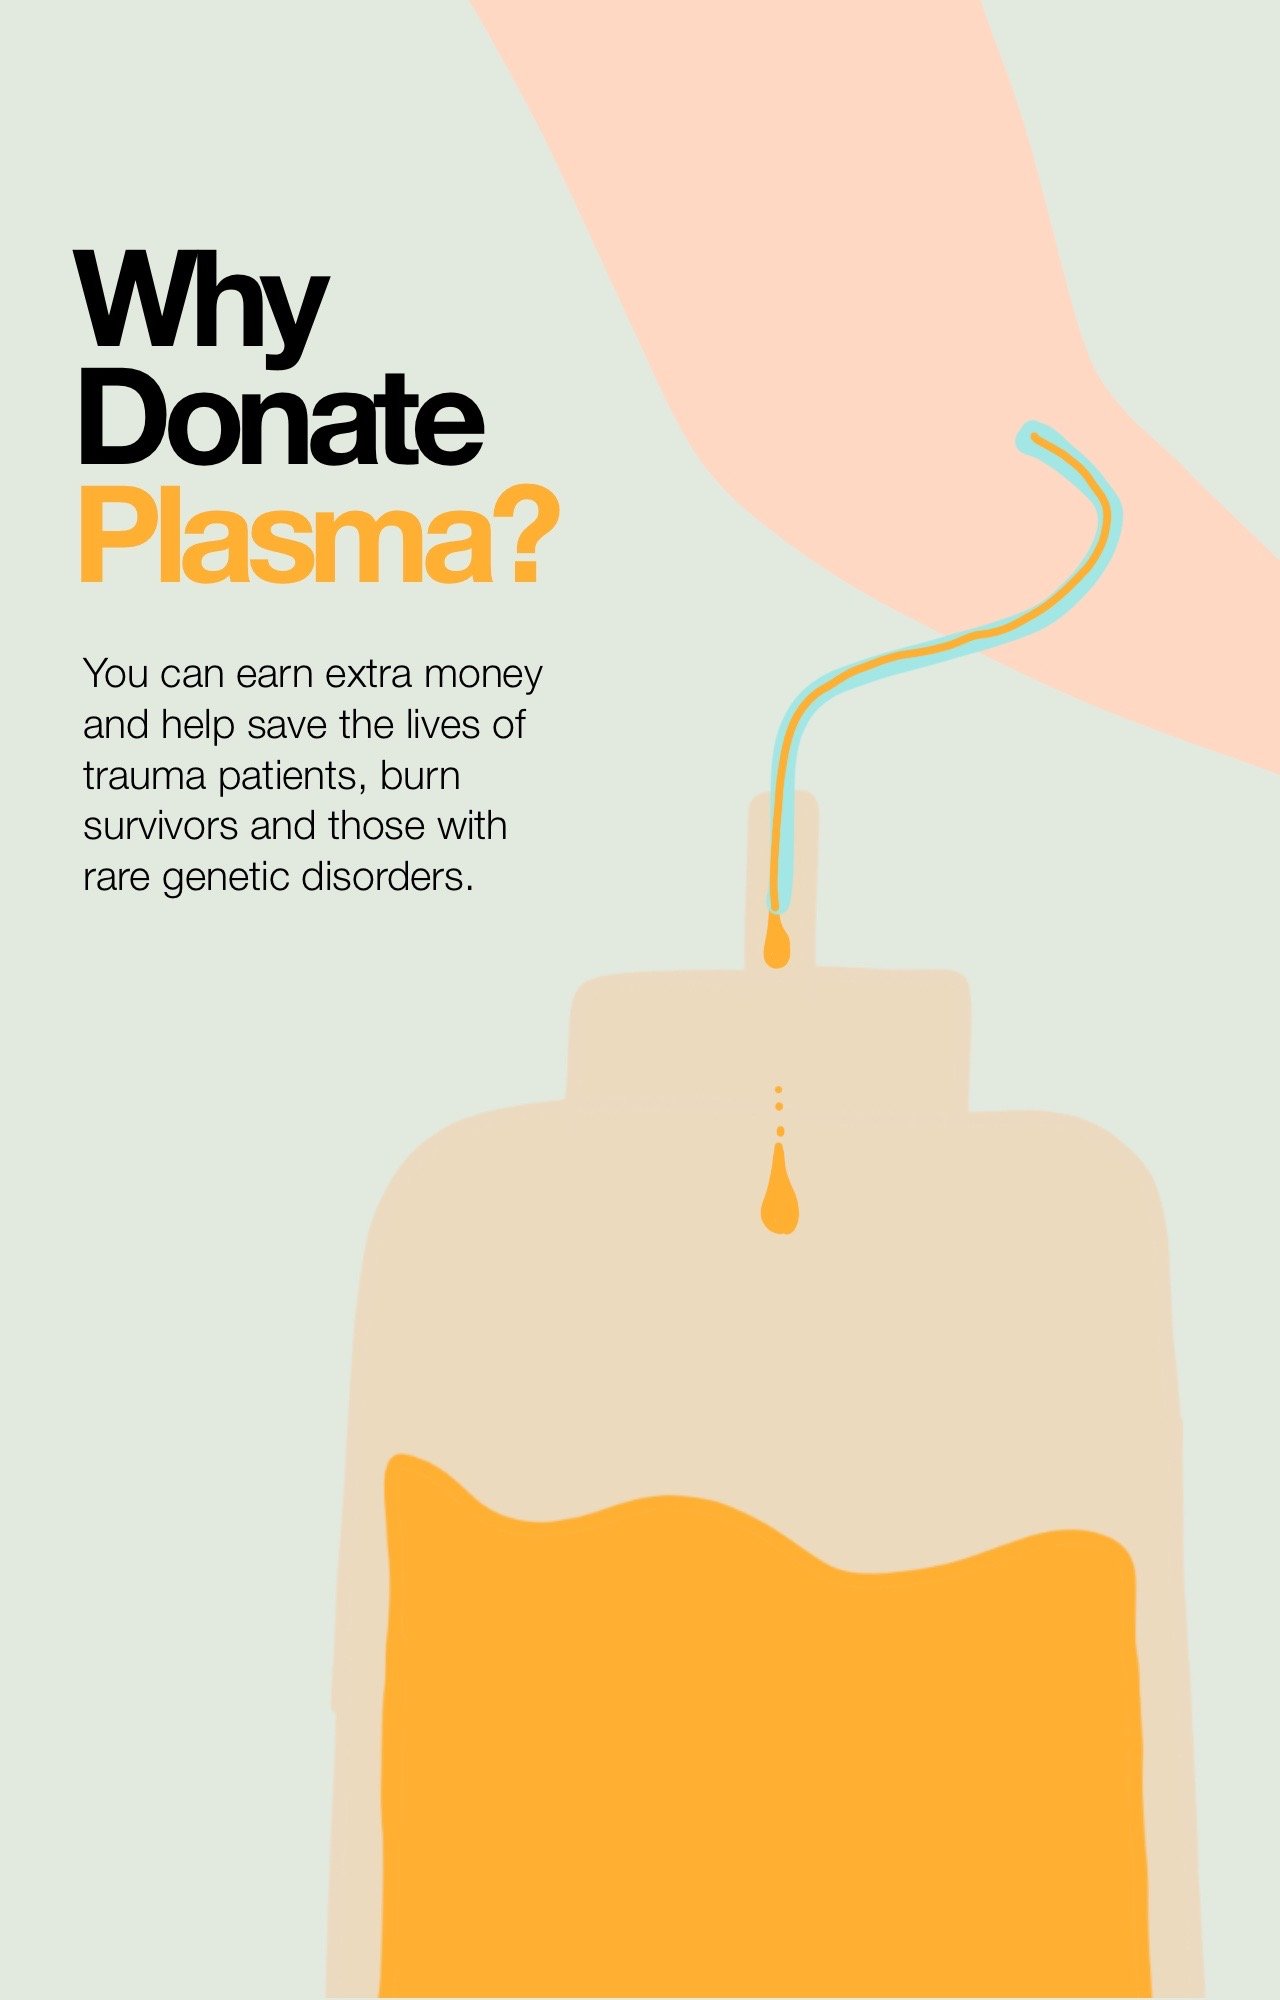 Is Donating Plasma Safe? Risks and Rewards of Plasma ...